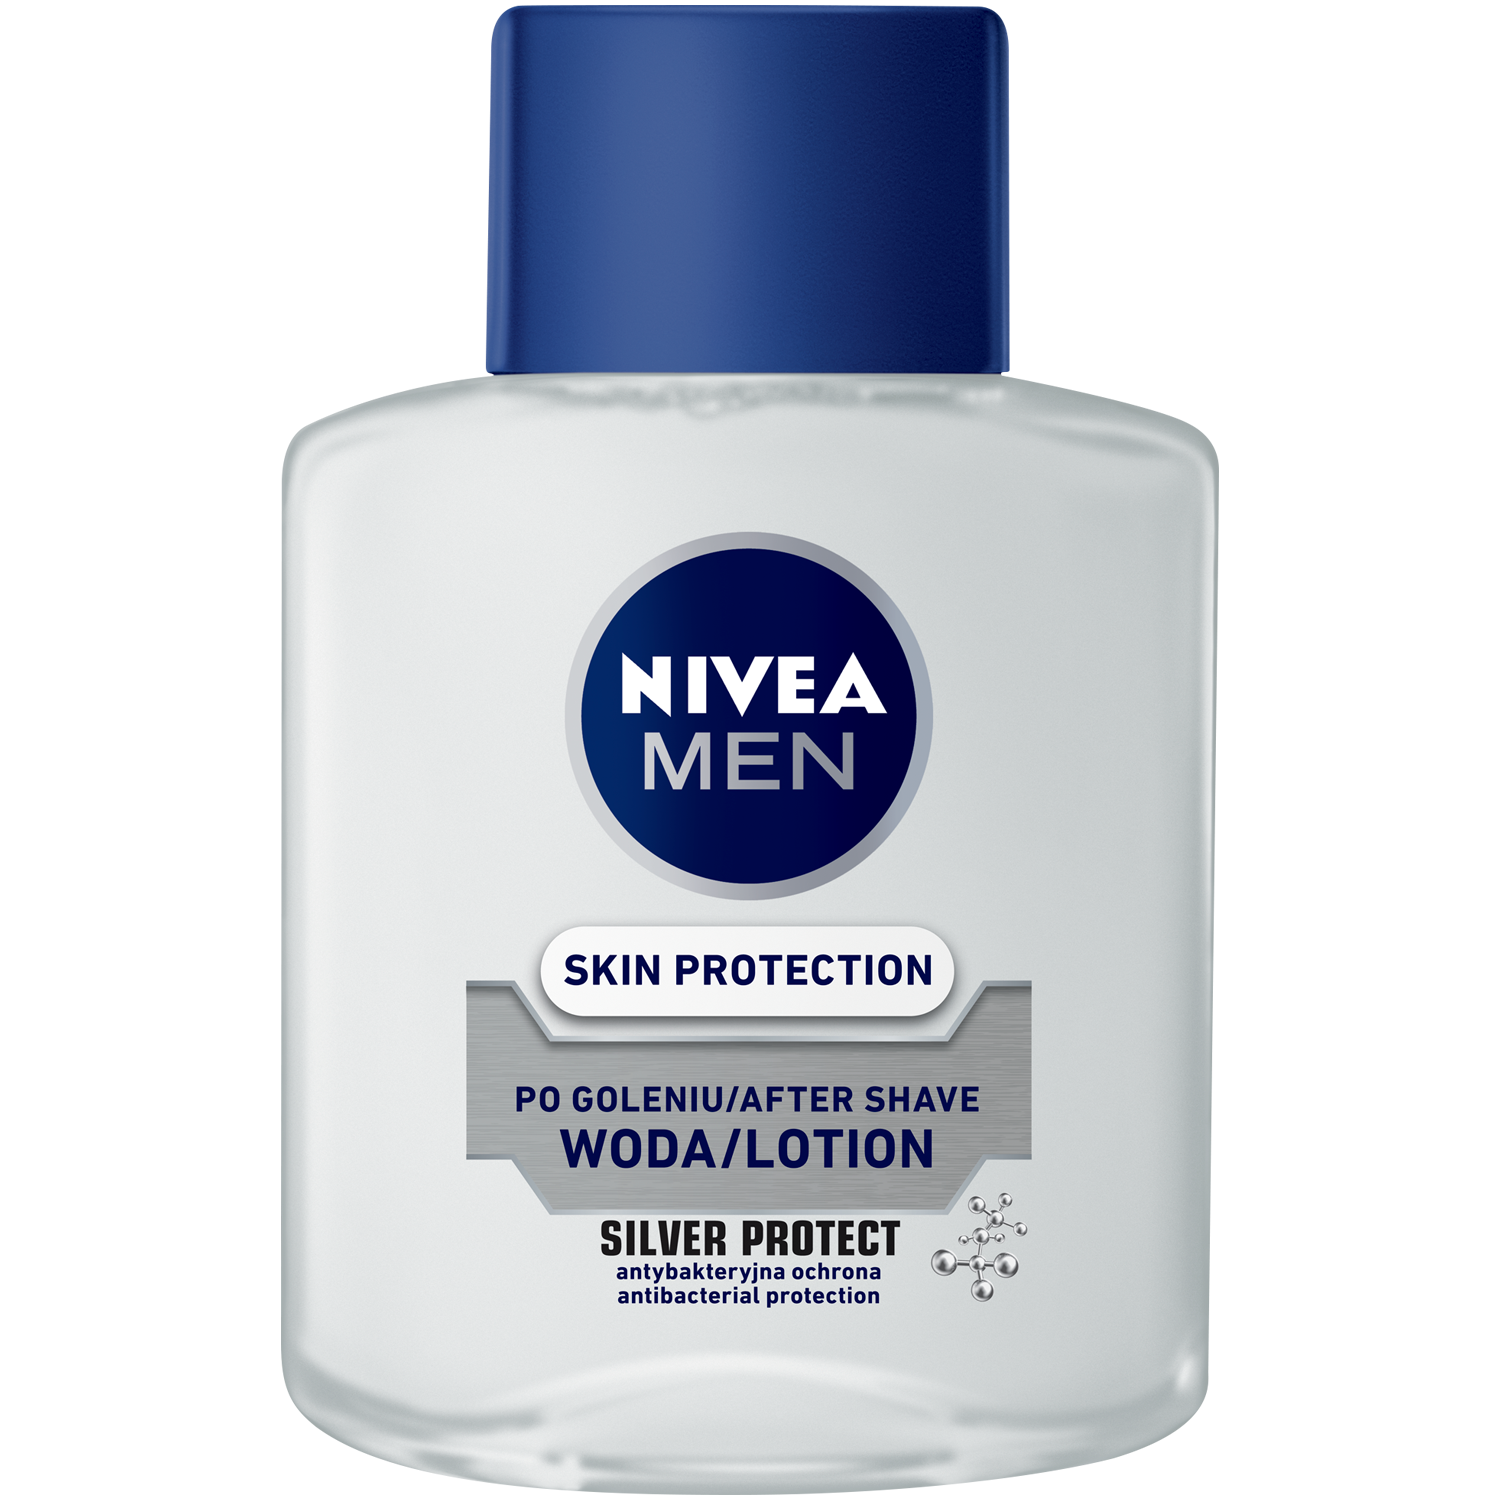 Nivea Men Skin Protection антибактериальное средство после бритья, 100 мл цена и фото